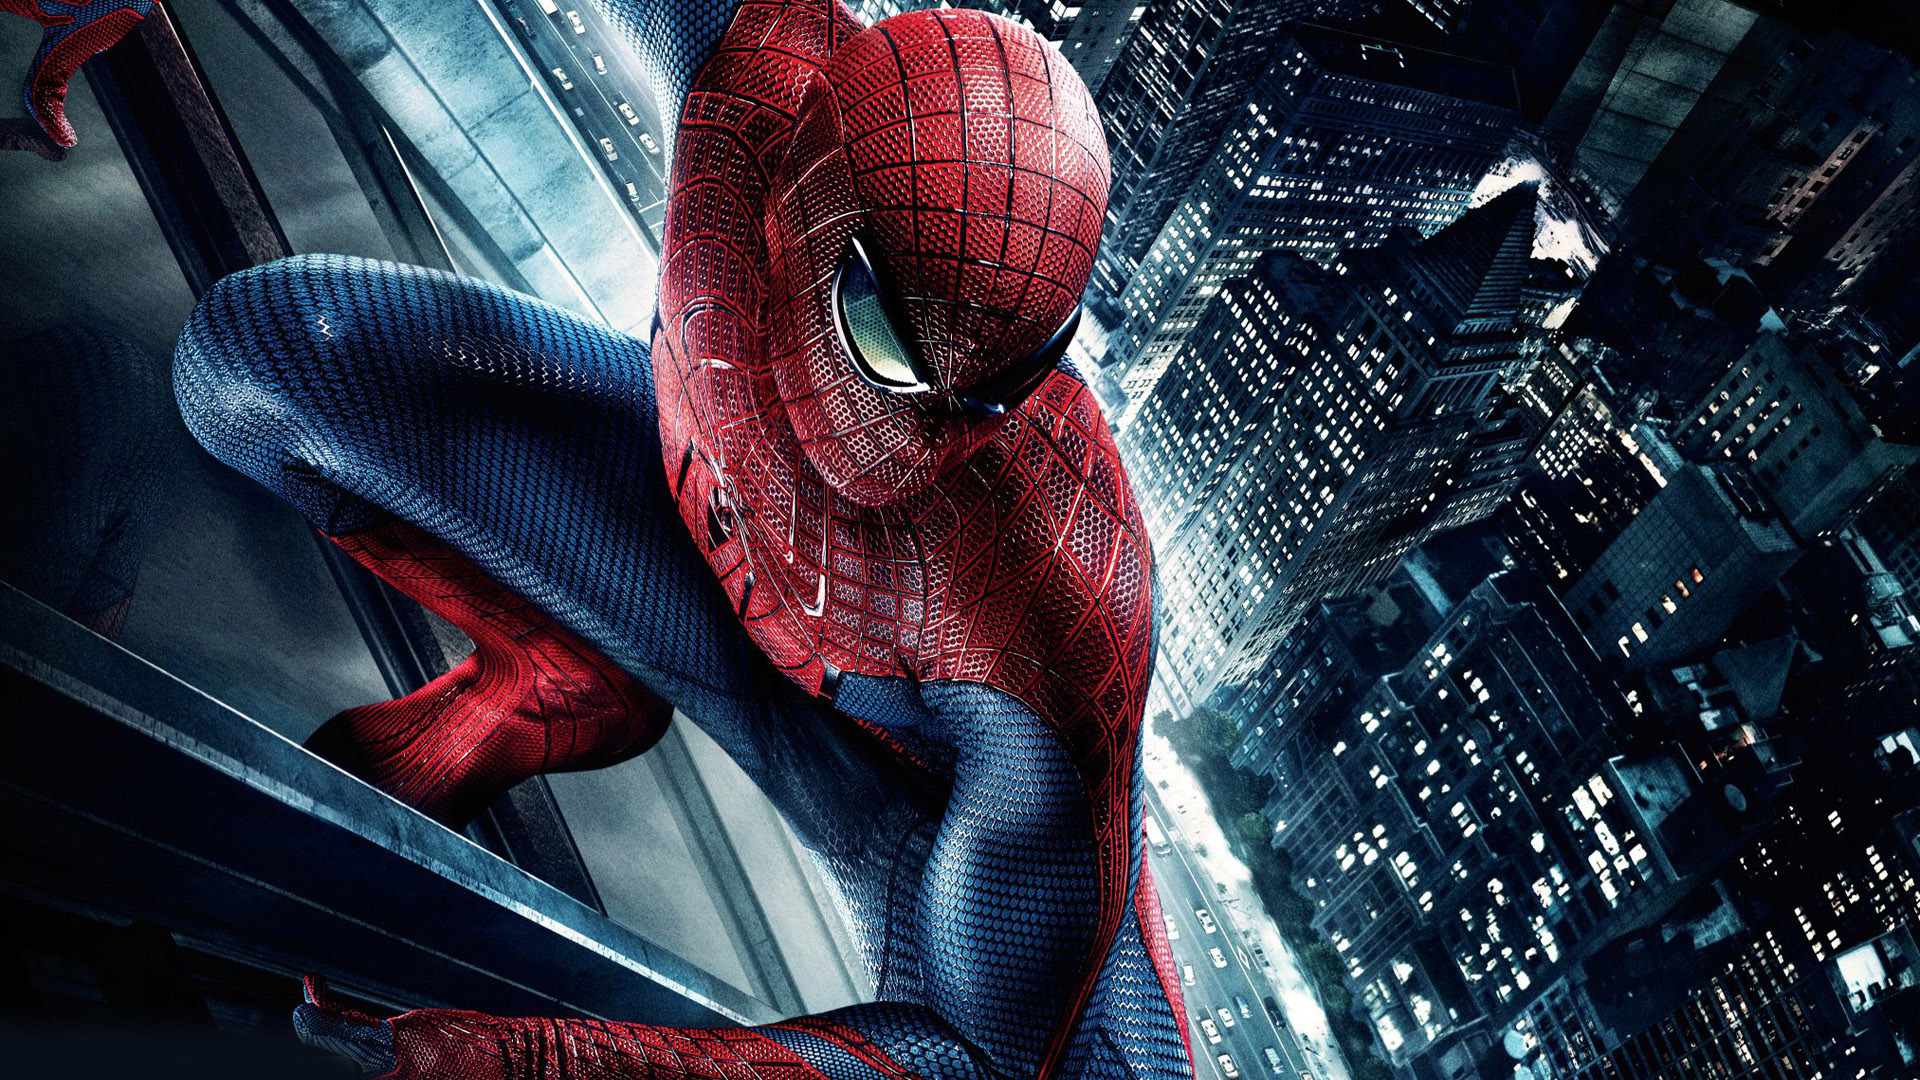 The Amazing SpiderMan 2 Movie HD wallpaper 02 Preview  10wallpapercom